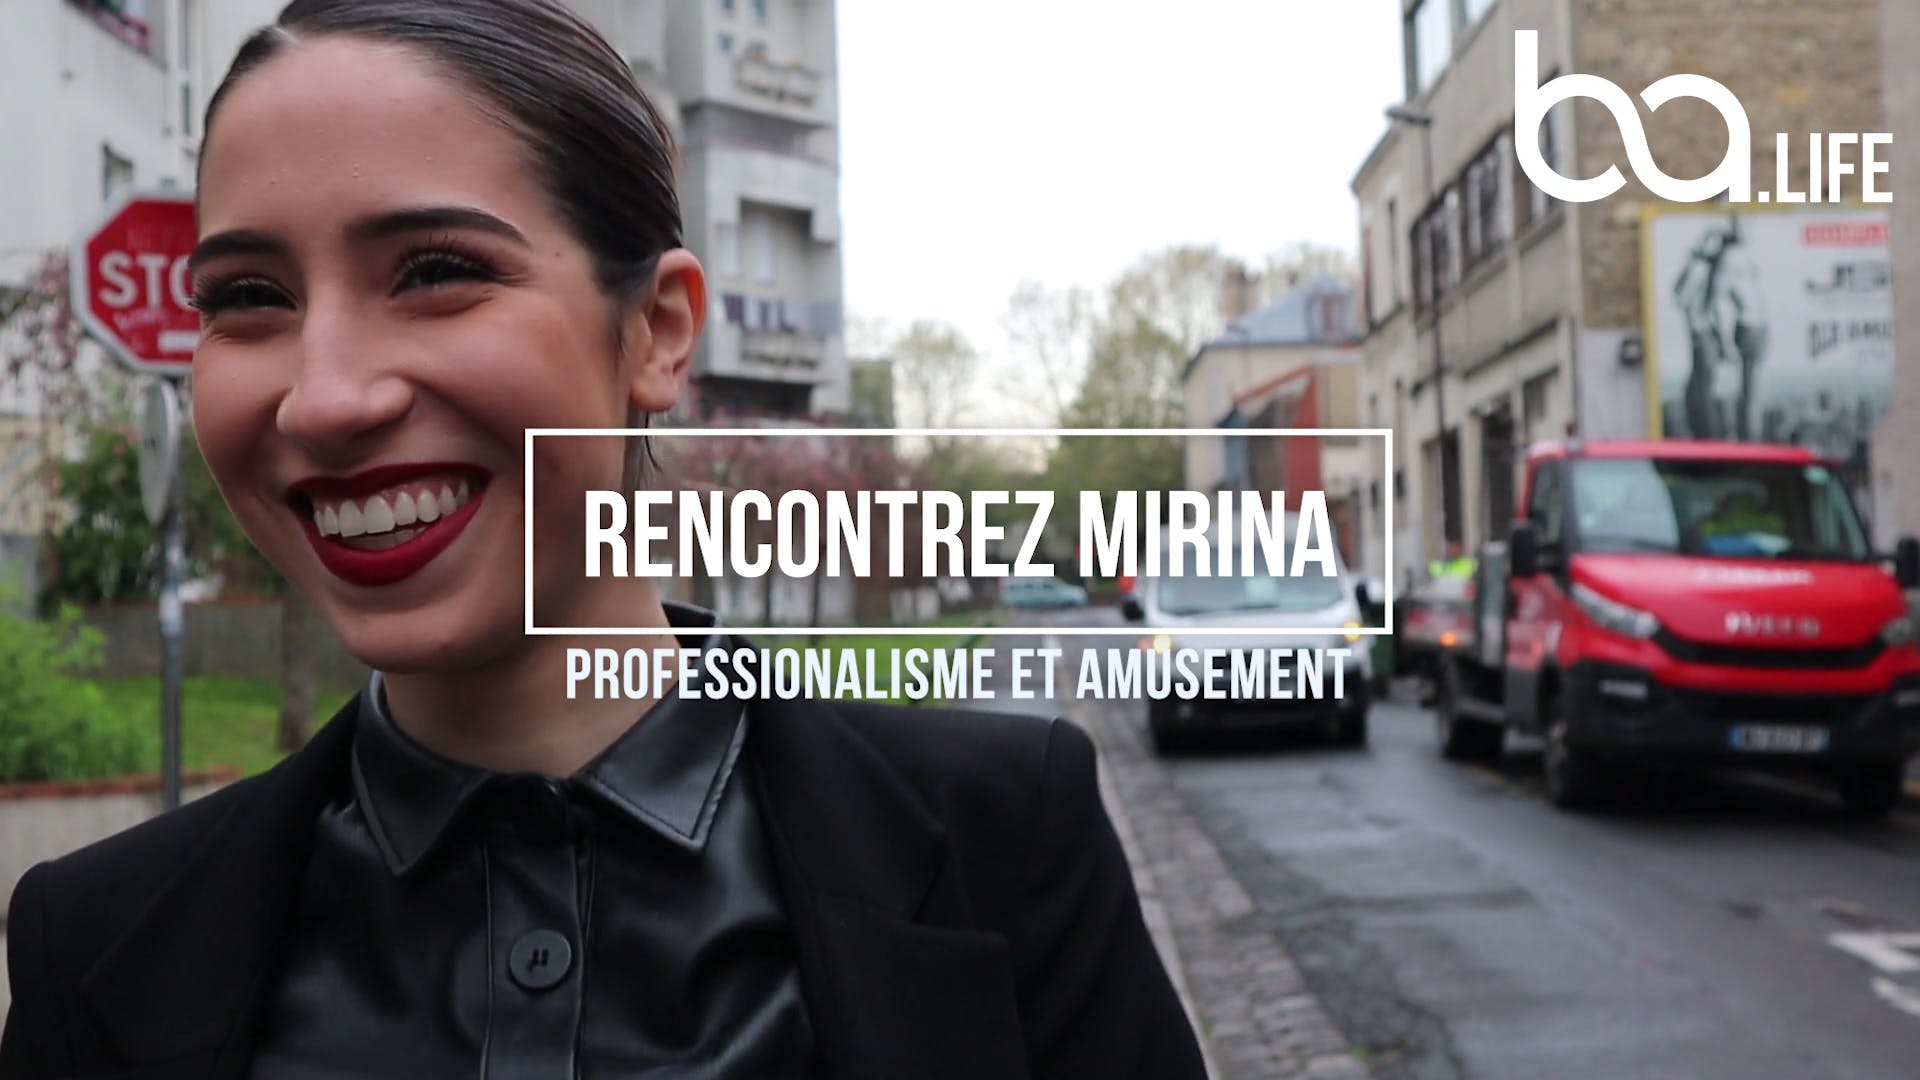 Rencontrez Mirina: Professionnalisme et amusement!